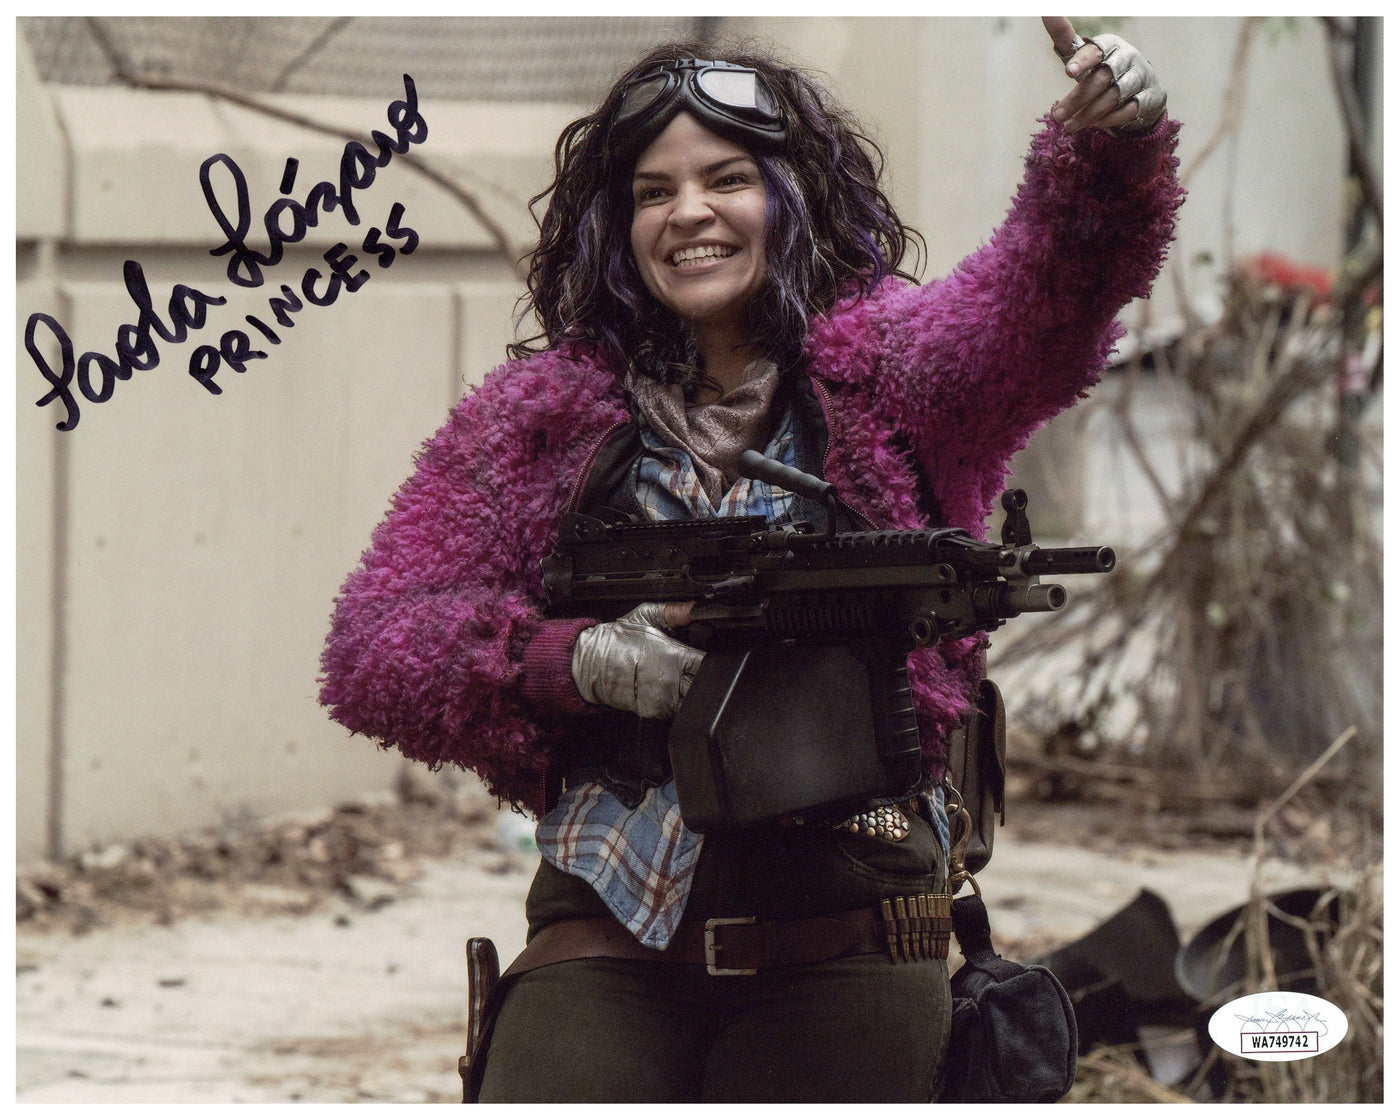 Paola Lázaro Signed 8x10 Photo The Walking Dead Princess Authentic Autographed JSA 3